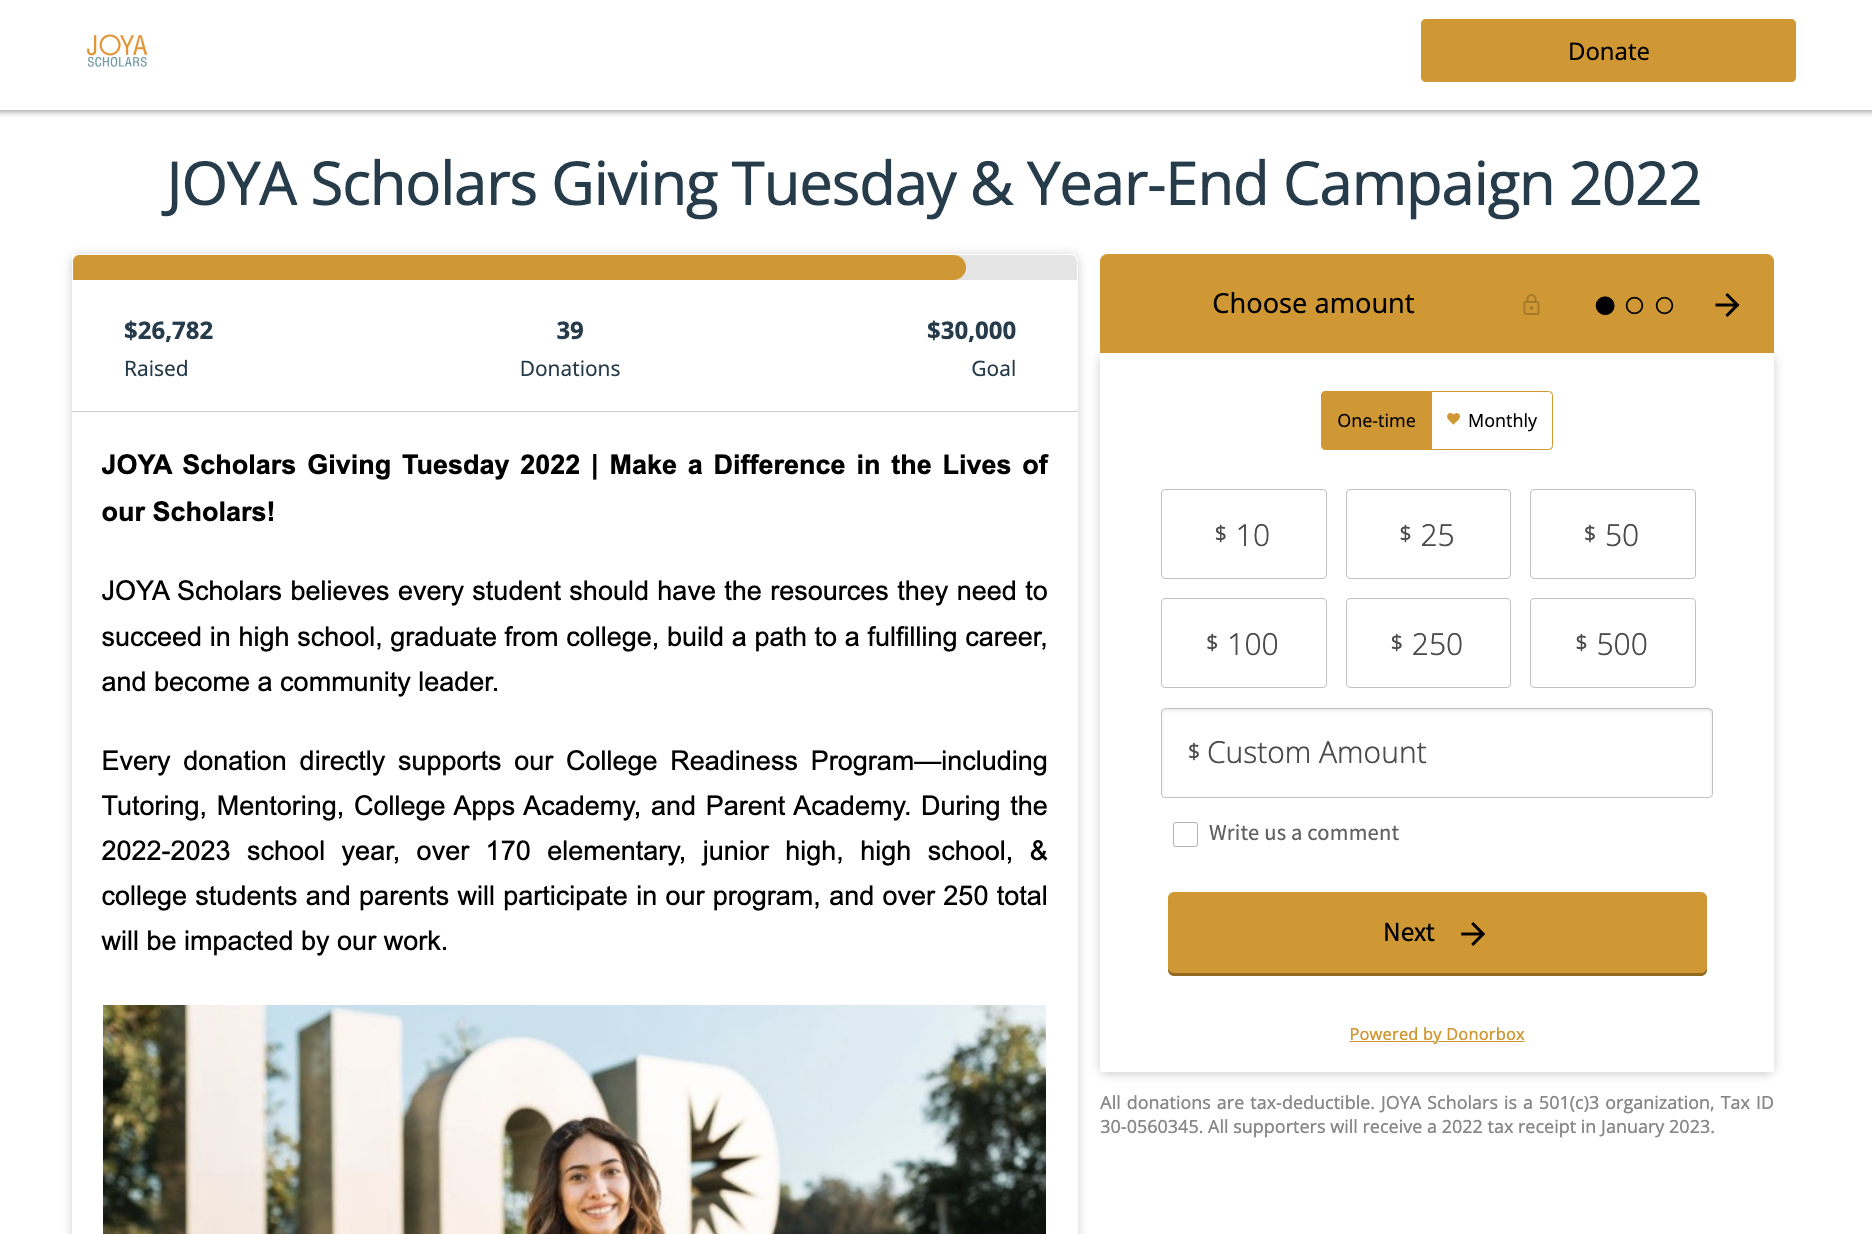 JOYA Scholars Giving Tuesday Campaign 2022